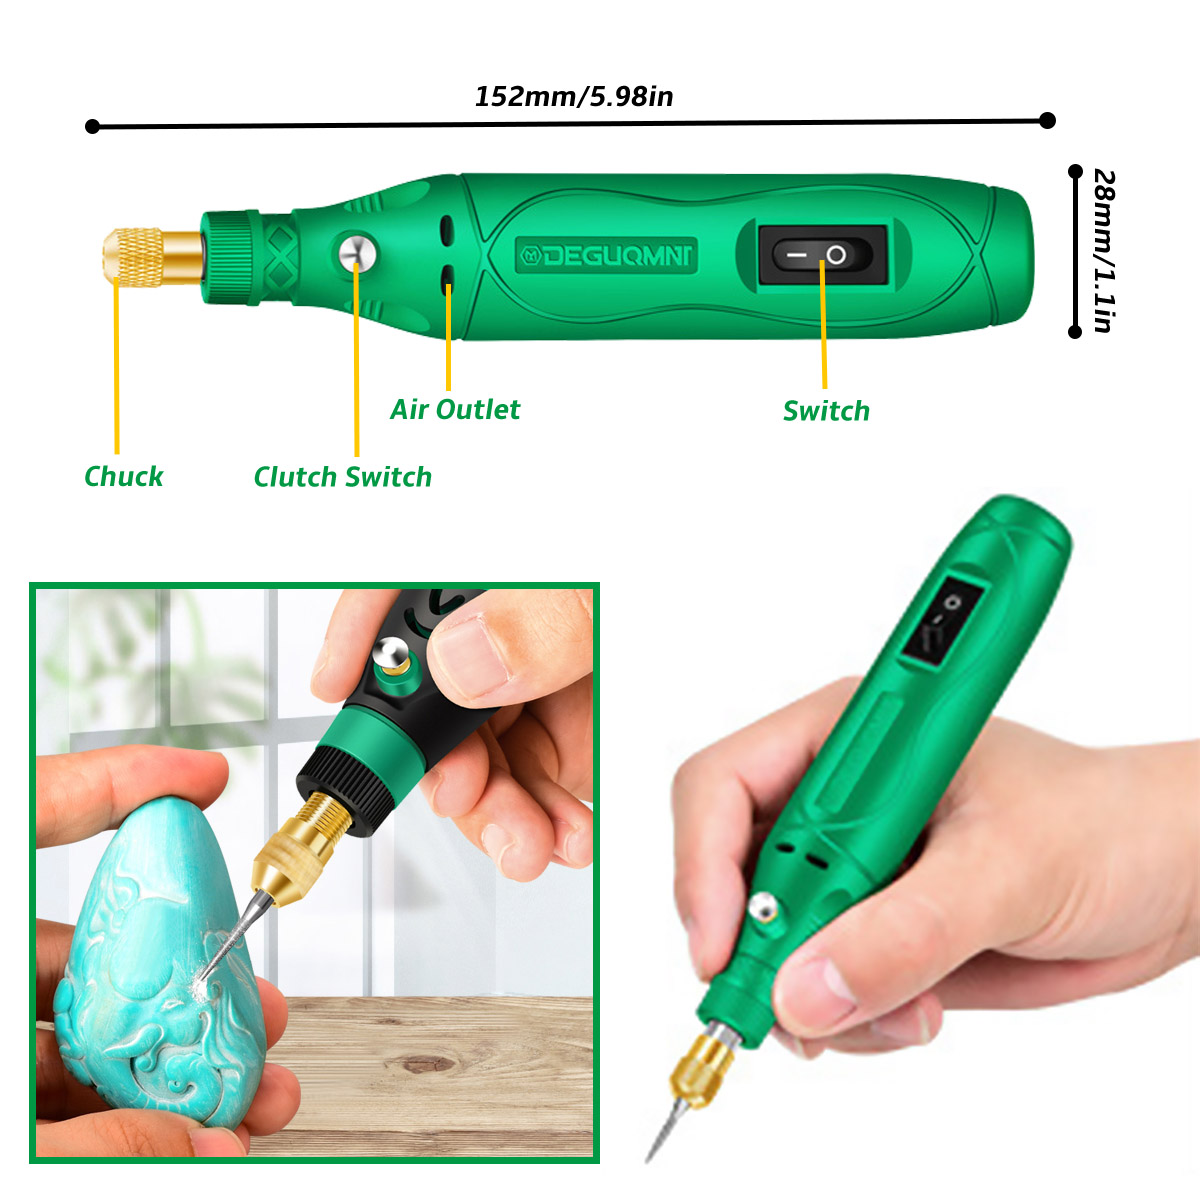 14000rmin-Electric-Grinding-Pen-Kit-Portable-Sanding-Grinding-Polishing-Engraving-Tool-For-Wood-Stai-1833054-8